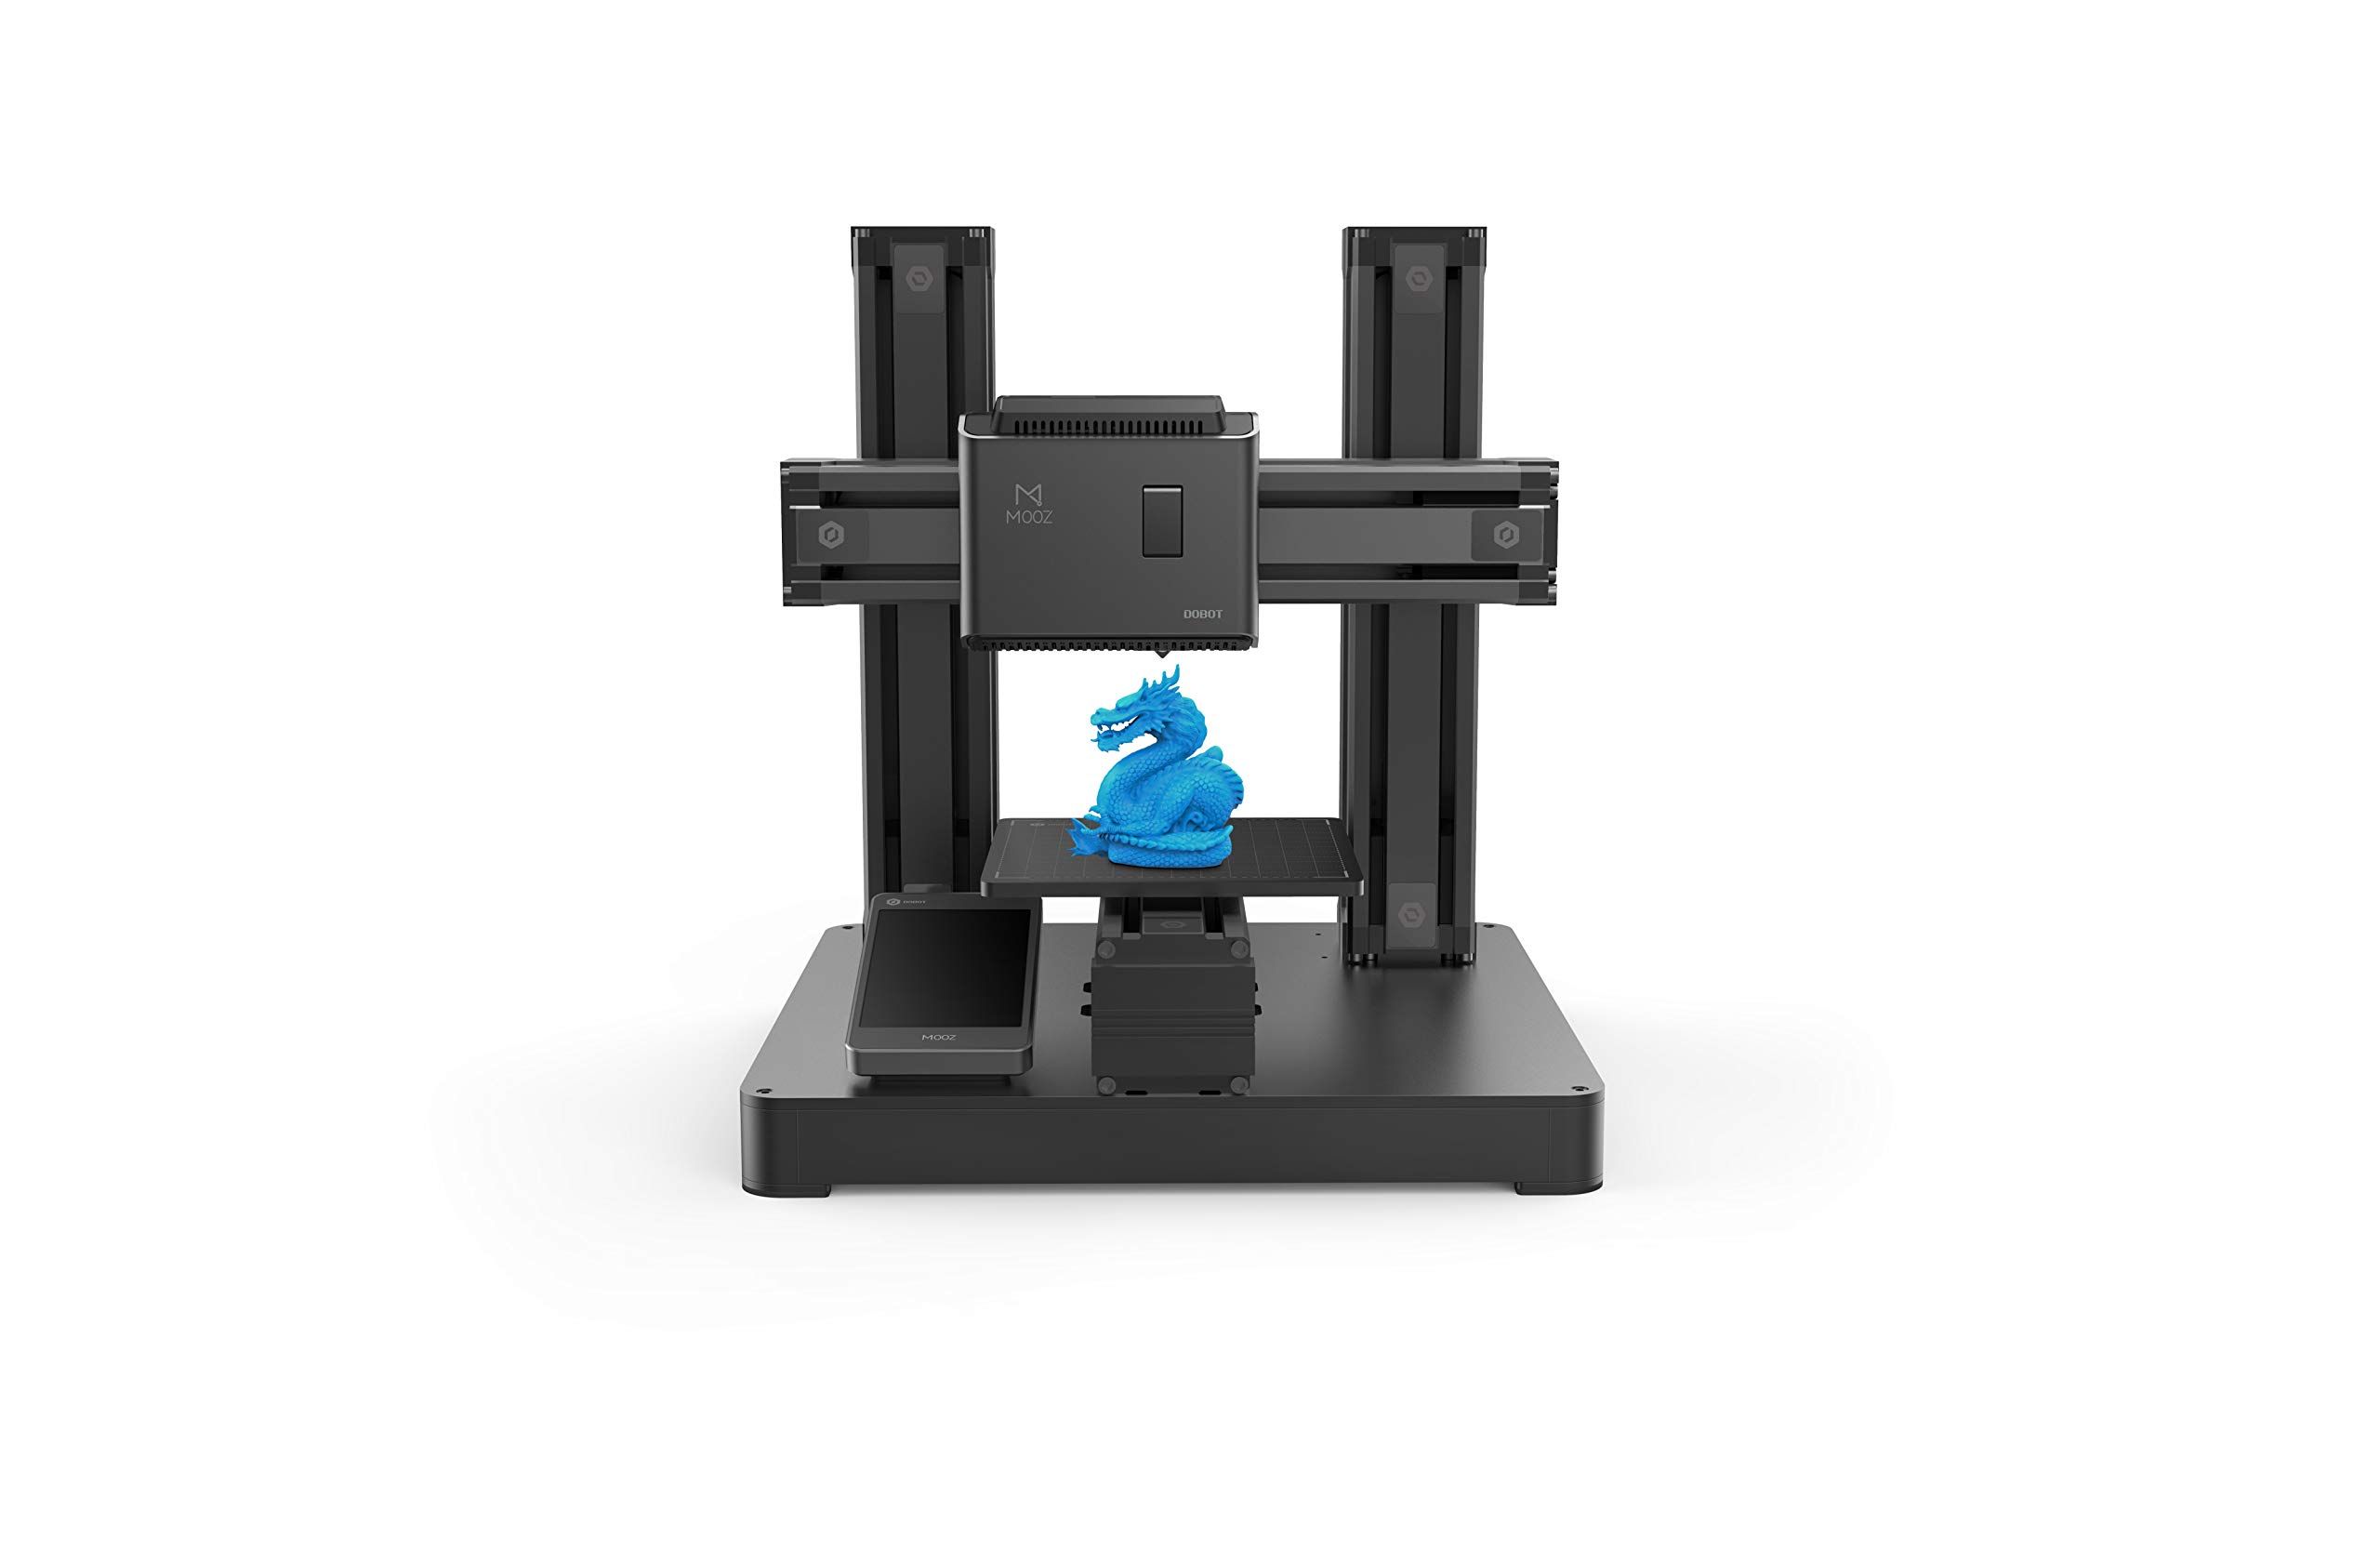 Imprimanta 3D Multifunctionala Dobot 3-in-1 Mooz-2 Plus Functii: imprimare 3D, CNC, Gravura Laser. Specificatii Tehnice Dispozitiv: Panou operare: Touch Screen, 3.5 inch_4